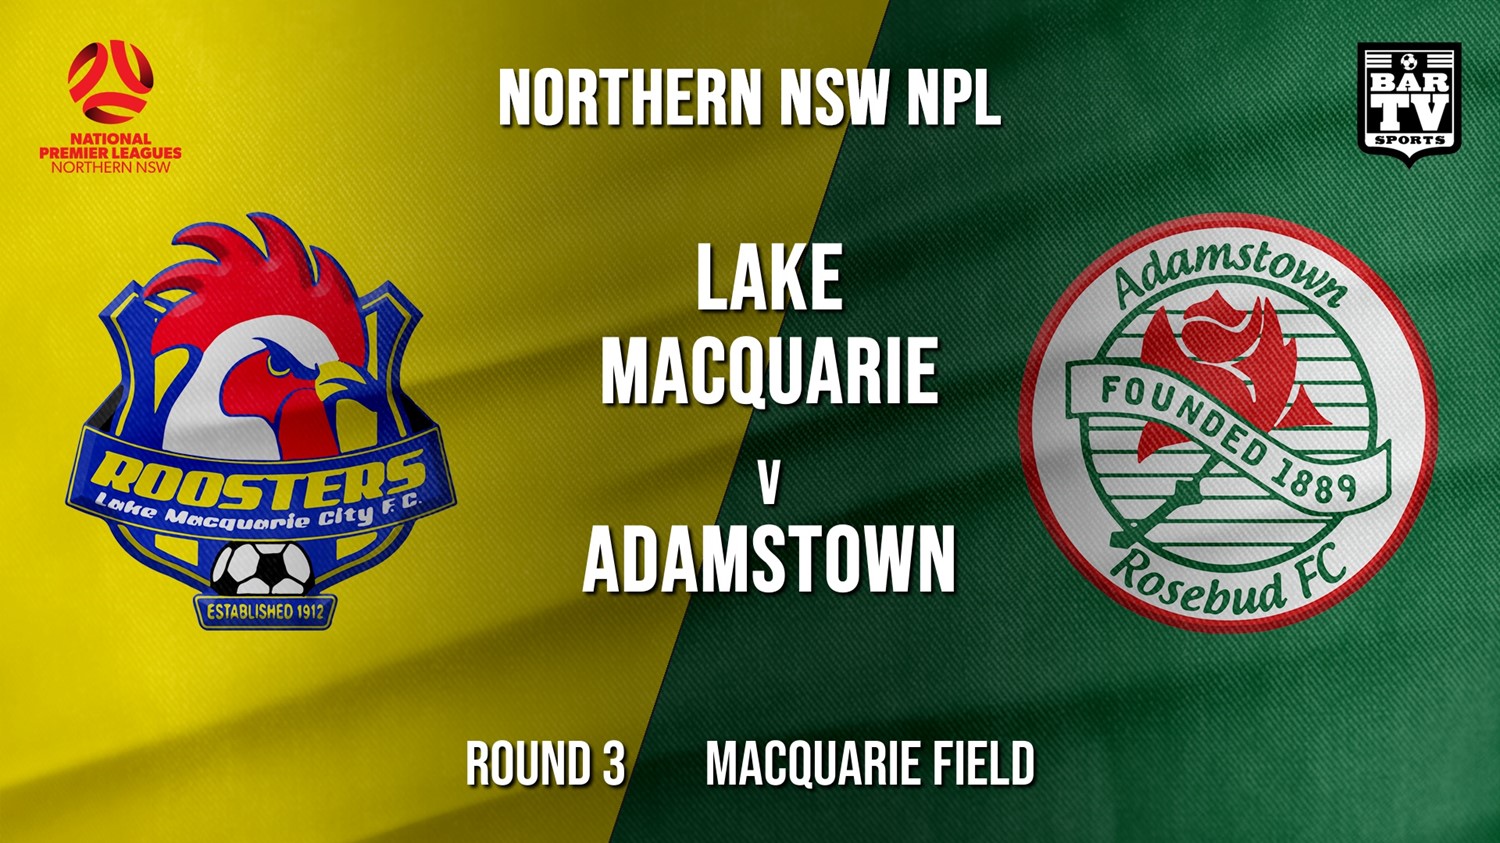 NPL - NNSW Round 3 - Lake Macquarie City FC v Adamstown Rosebud FC Minigame Slate Image